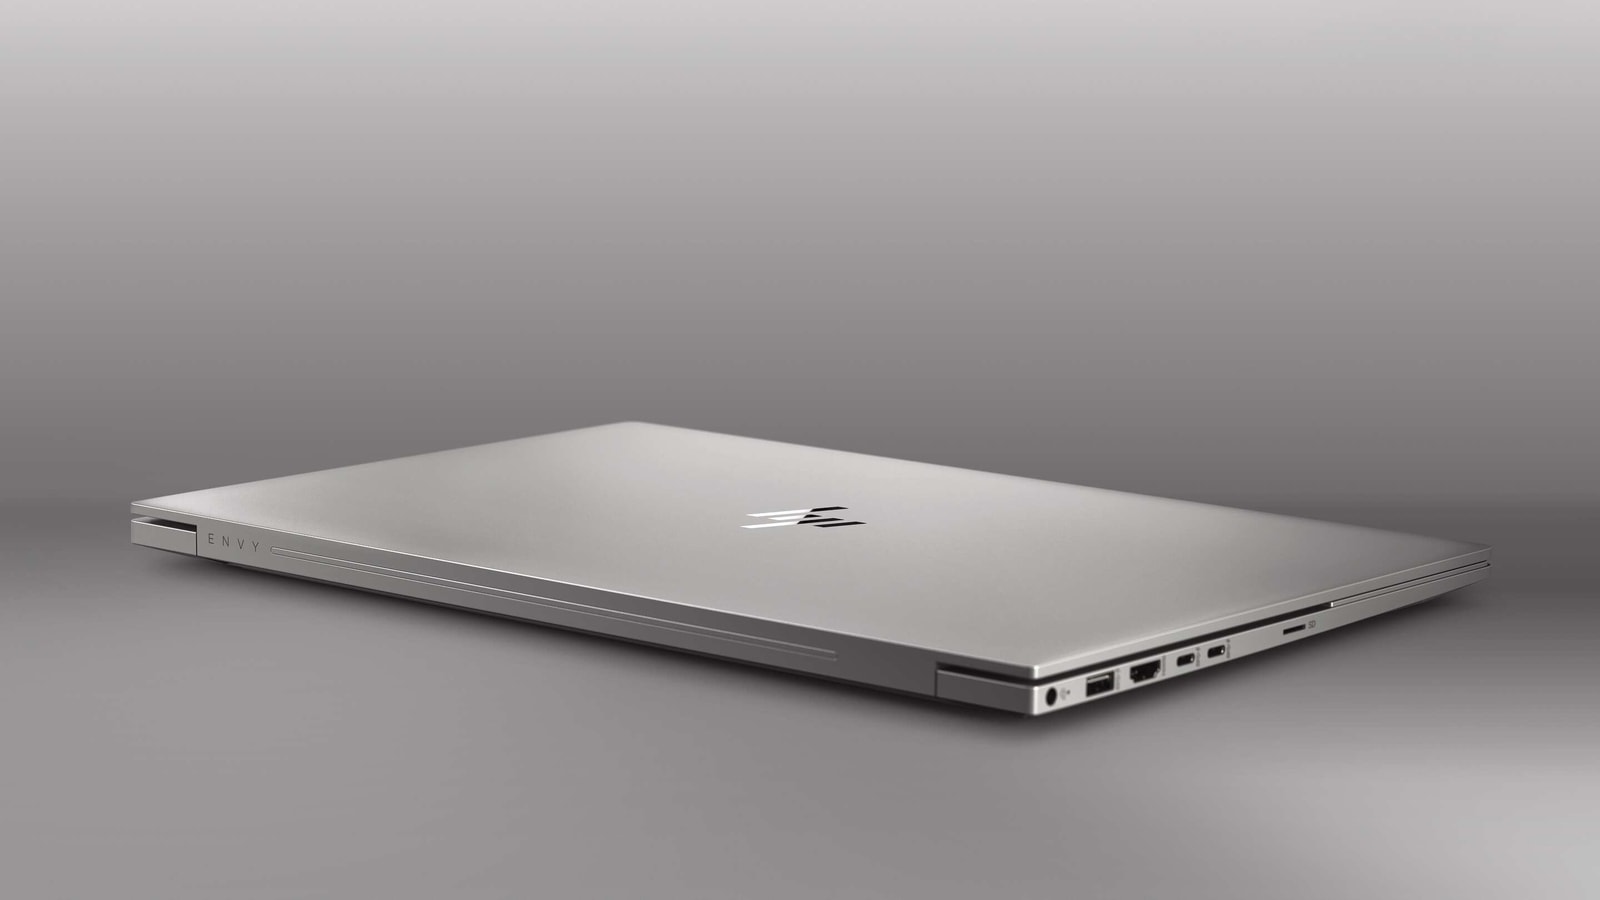 HP® ENVY x360 15t Laptop: A Complete Review